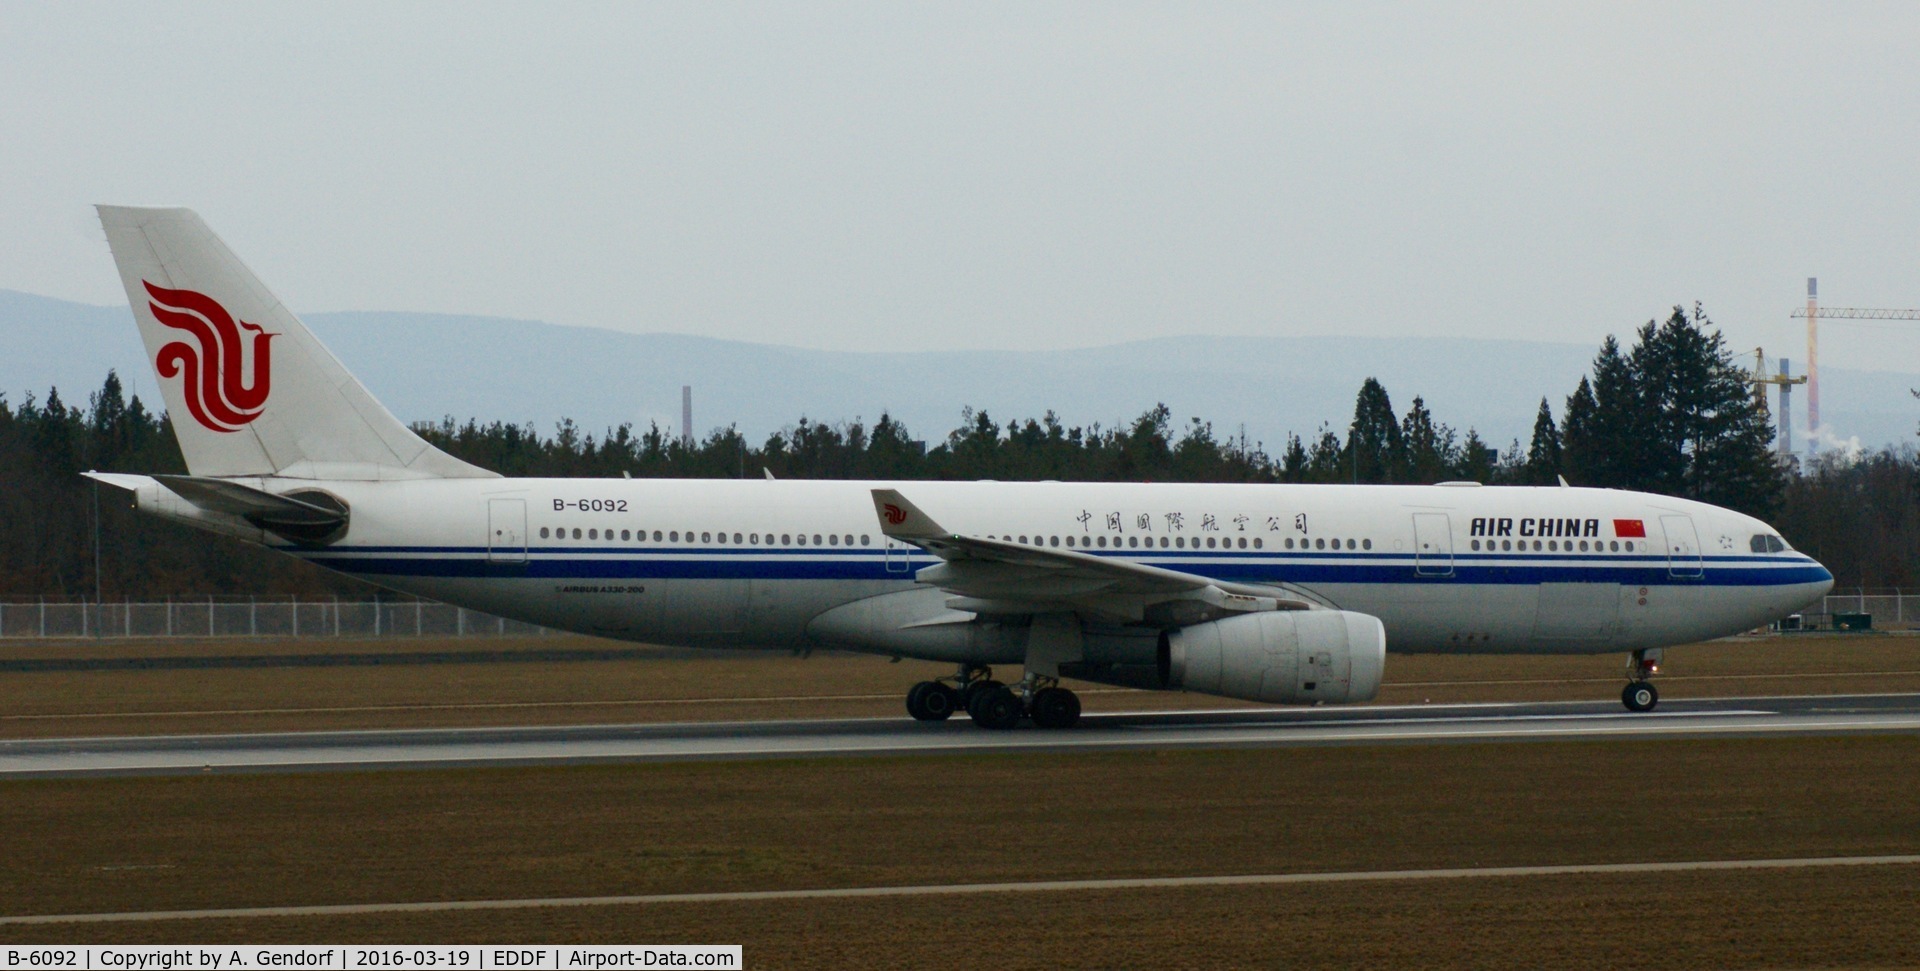 B-6092, 2007 Airbus A330-243 C/N 873, Air China, is here taxiing to the gate at Frankfurt Rhein/Main(EDDF)